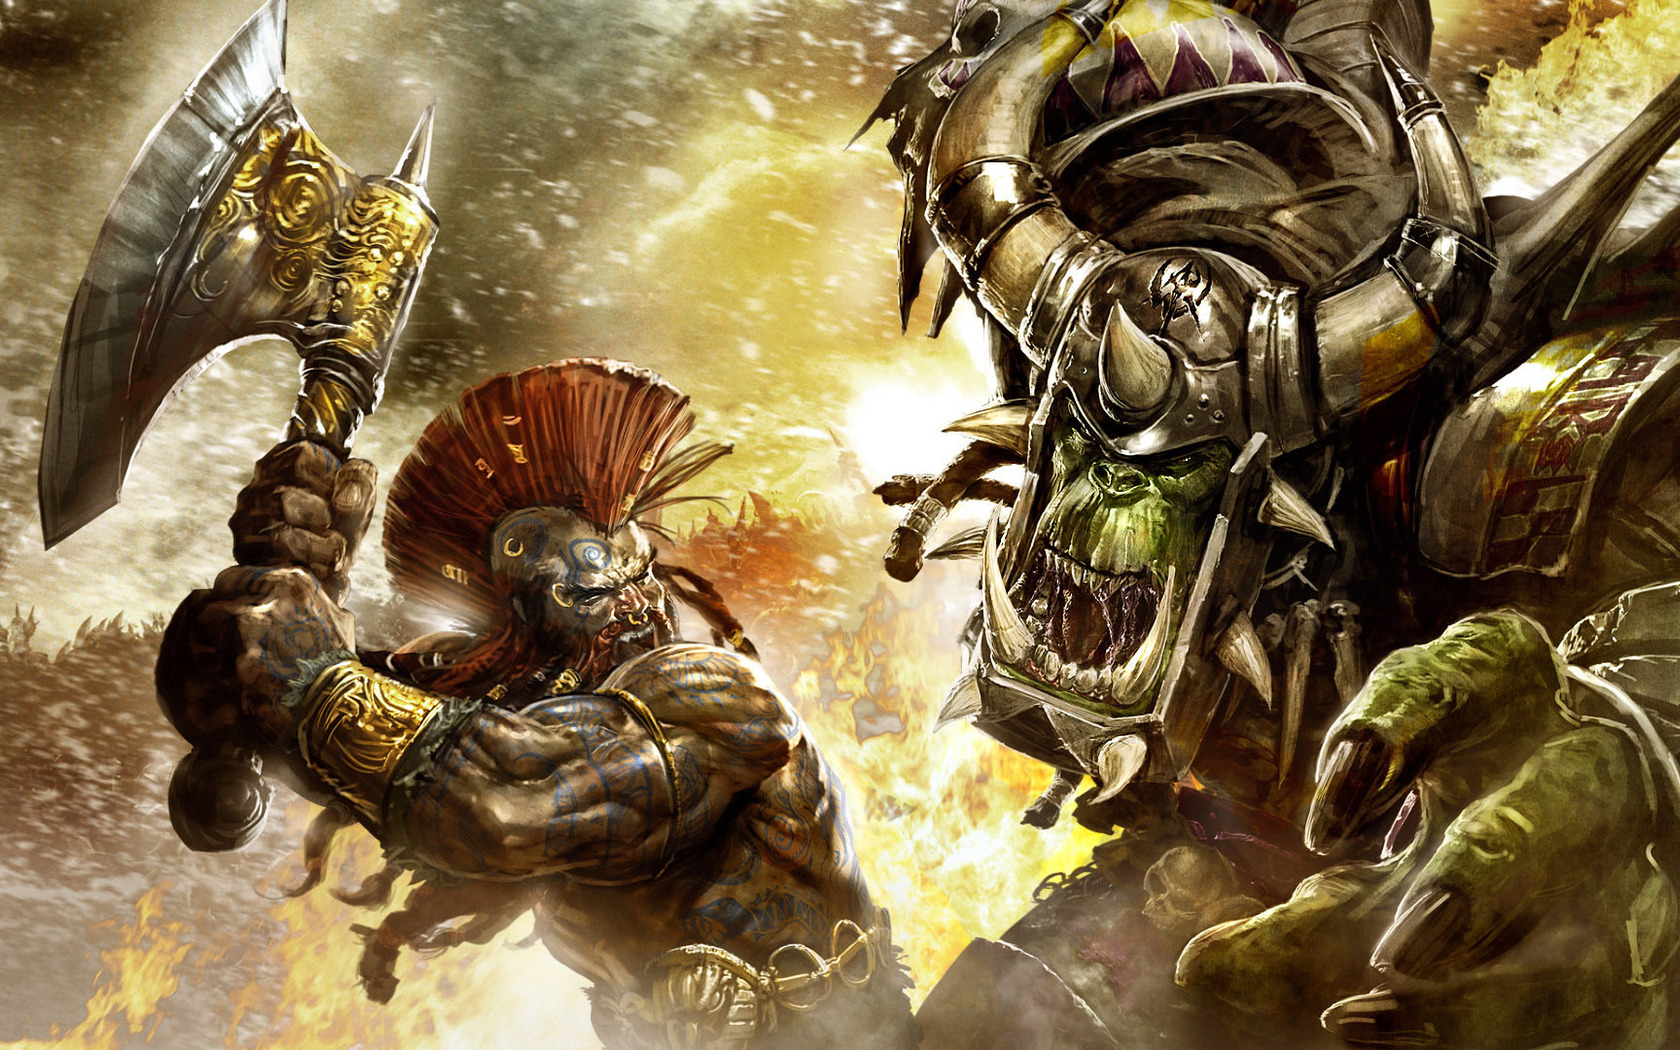 video game, warhammer online: age of reckoning, warhammer